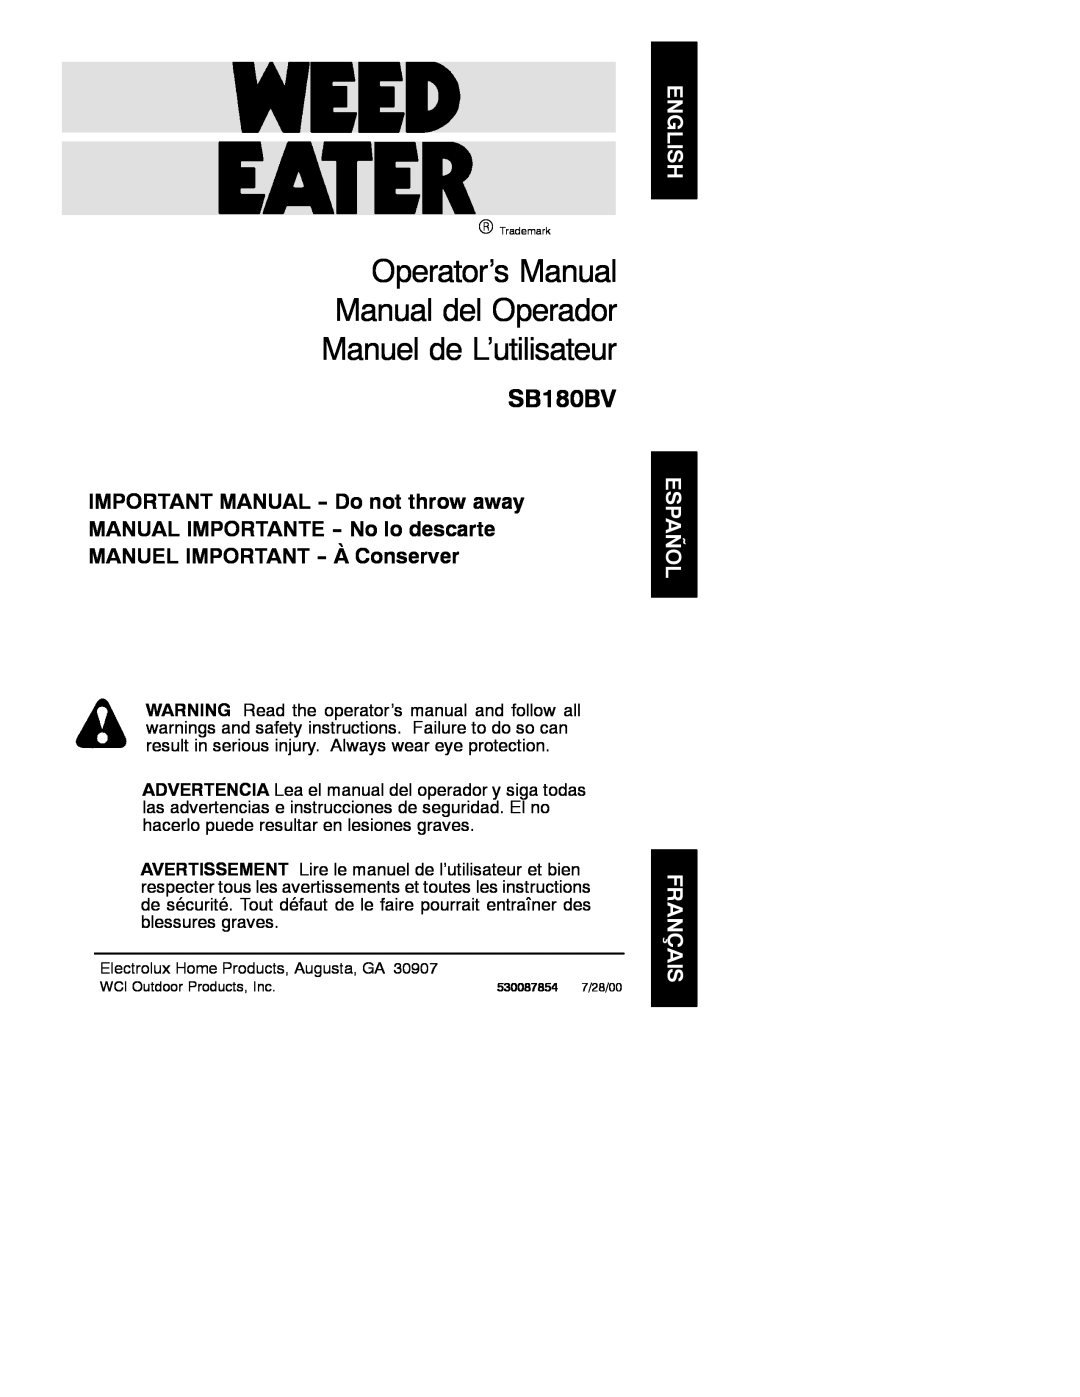 Weed Eater 530087854 manual Operator’s Manual Manual del Operador Manuel de L’utilisateur, SB180BV 